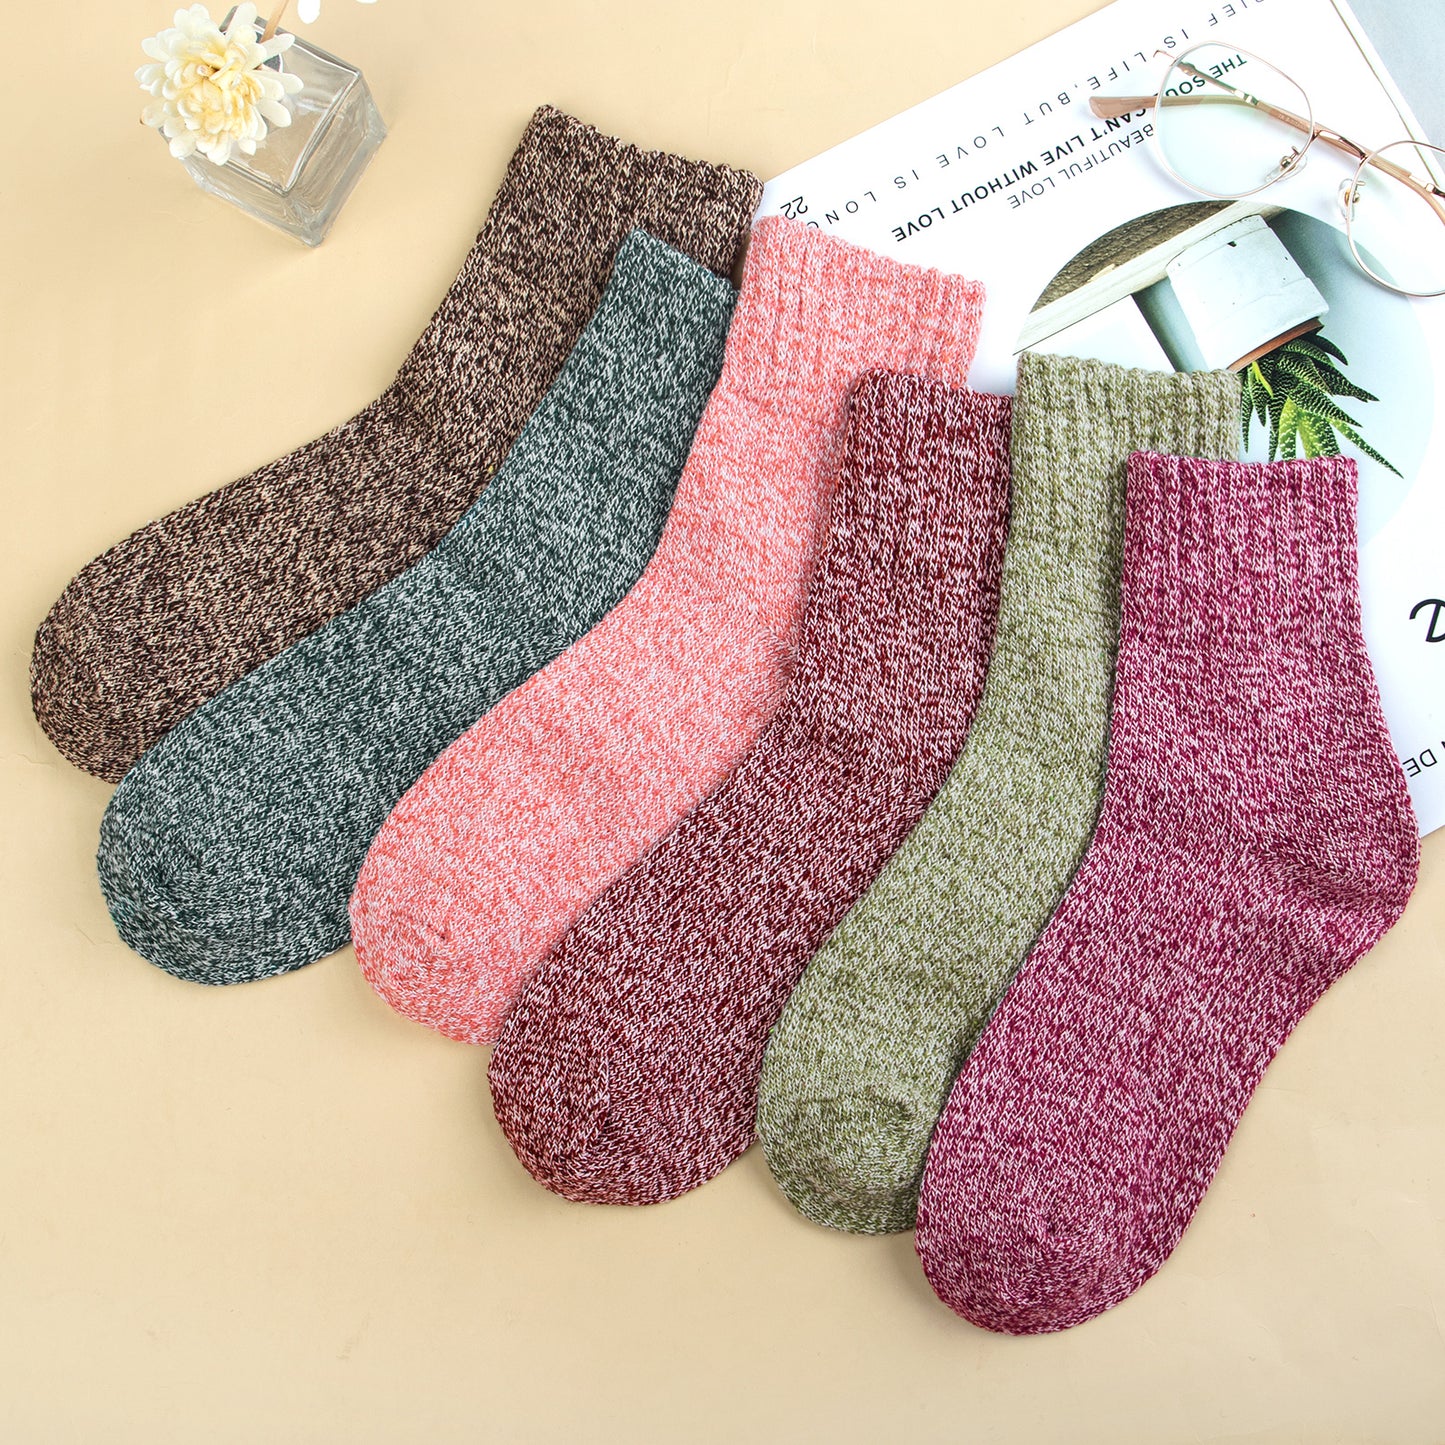 Loritta 6 Pairs Womens Socks Wool Socks Cashmere Thick Knit Warm Winter Socks for Women Gifts